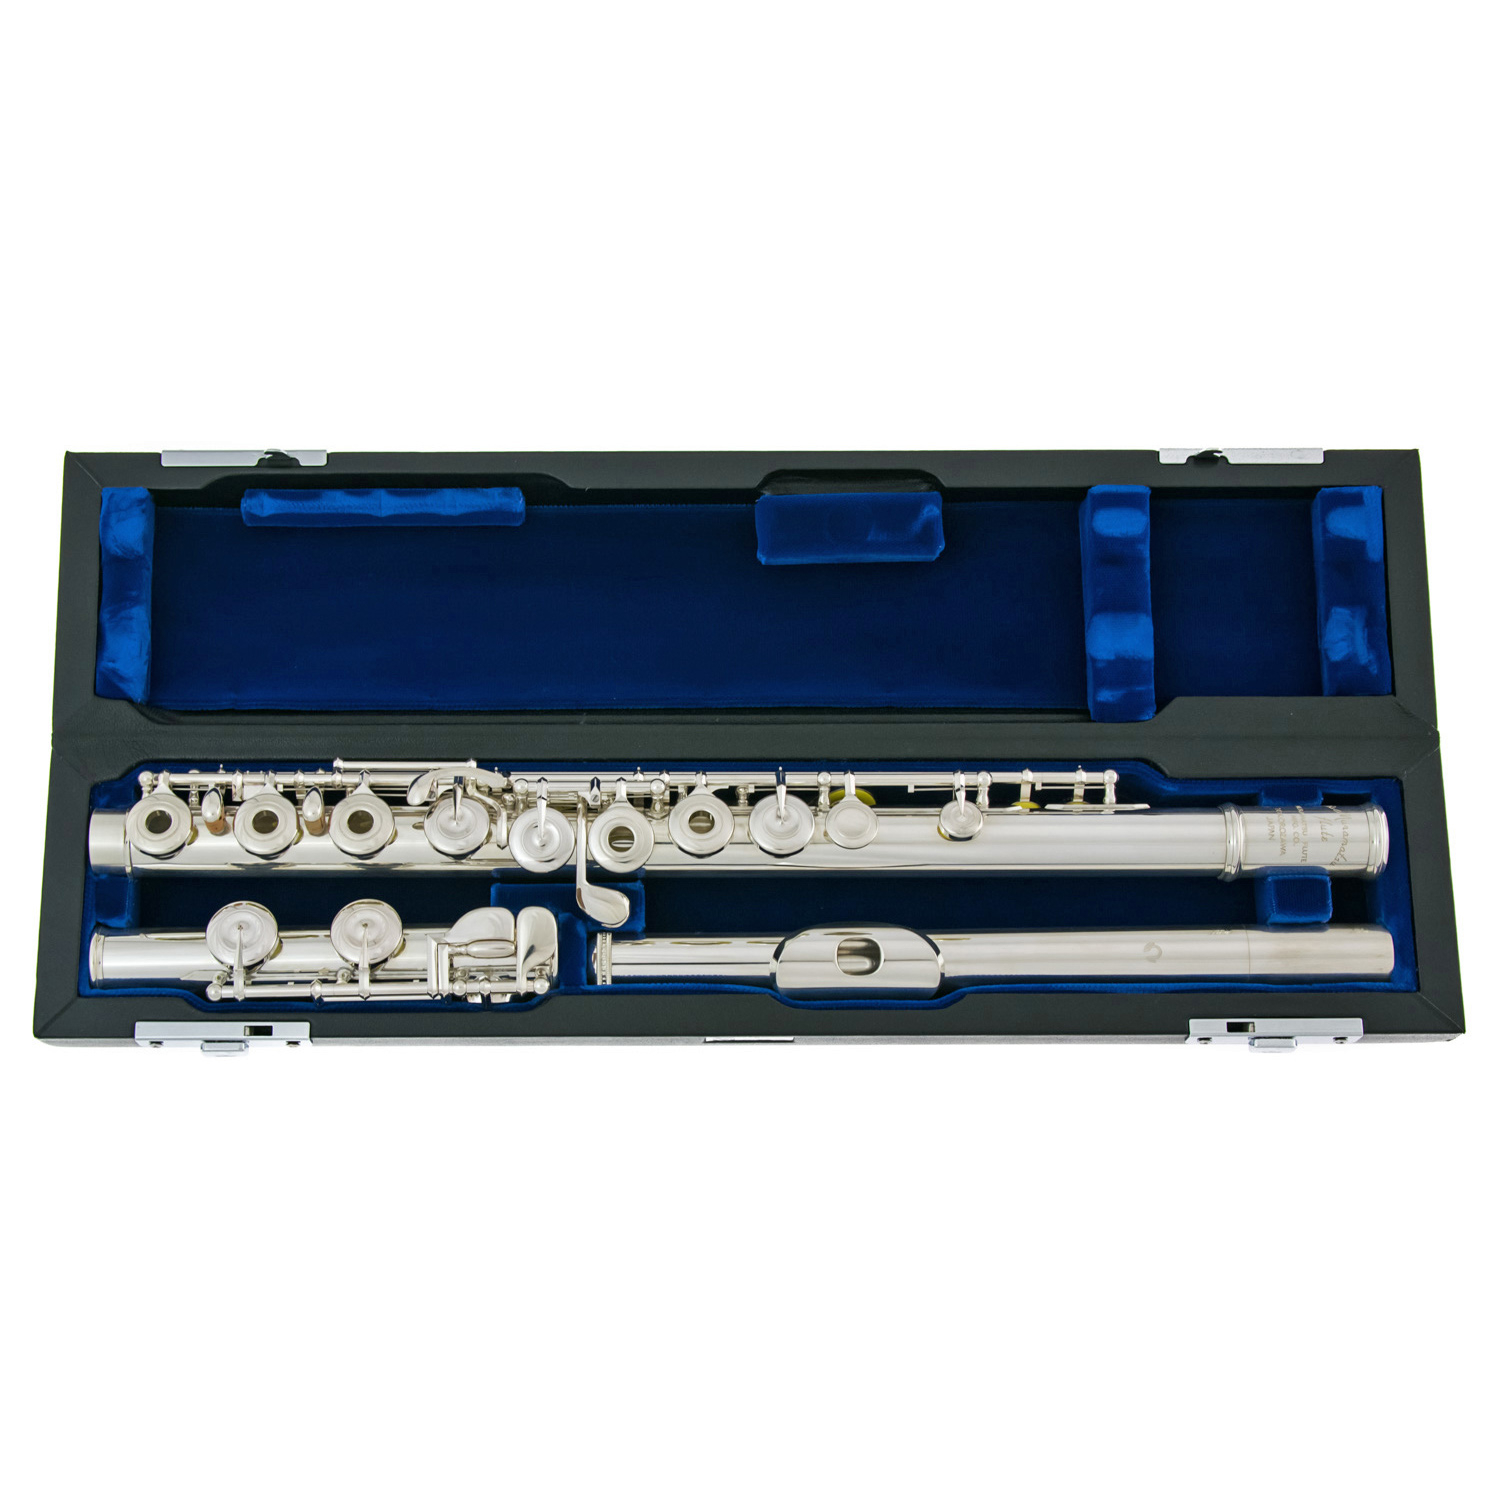 Muramatsu Flute - EX III CE